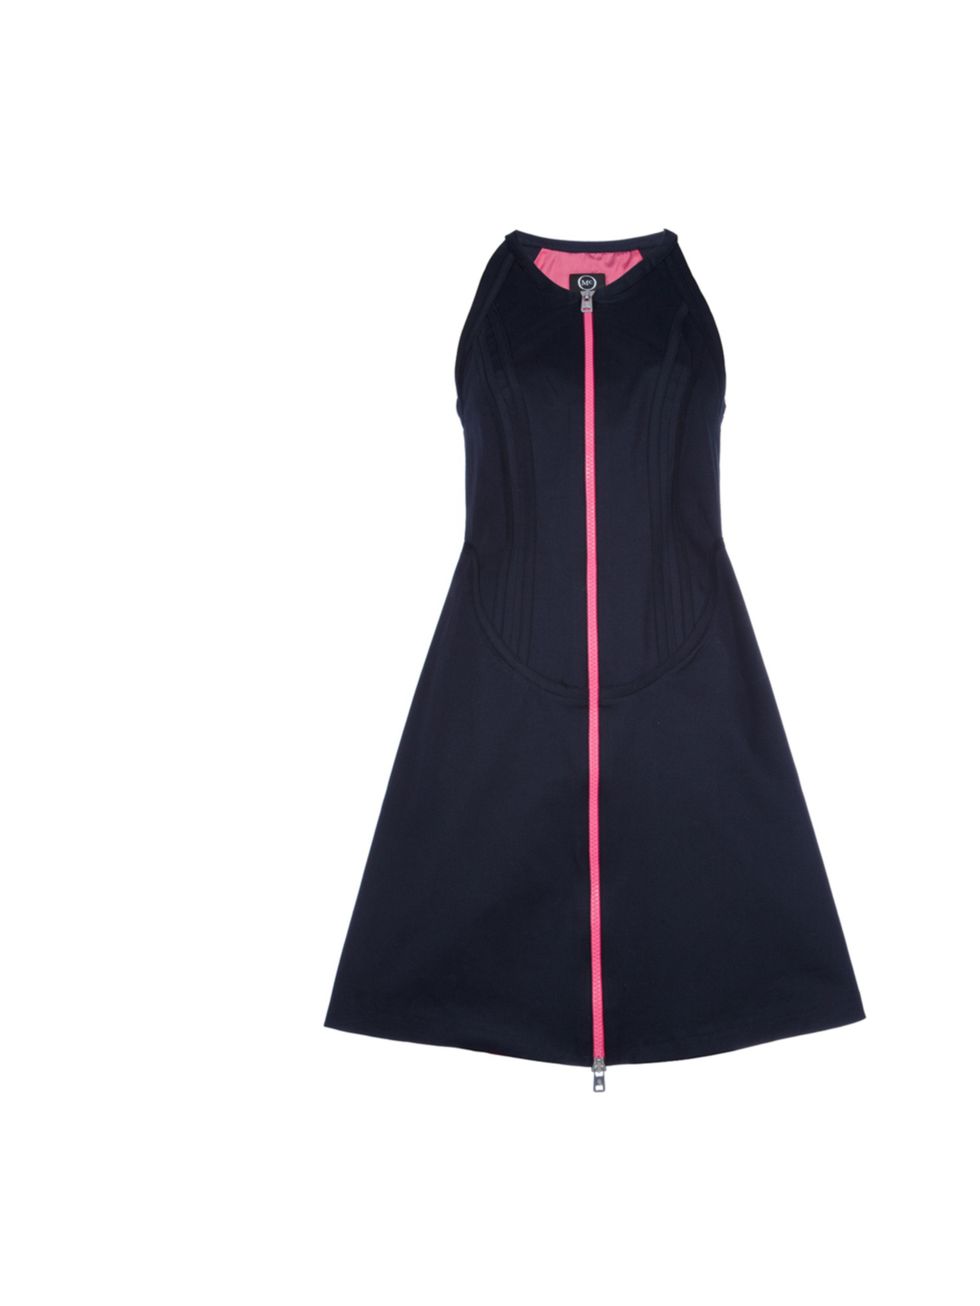 <p>McQ sporty scuba dress, £329, at Farfetch</p><p><a href="http://shopping.elleuk.com/browse?fts=mcq+zip+front+dress">BUY NOW</a></p>